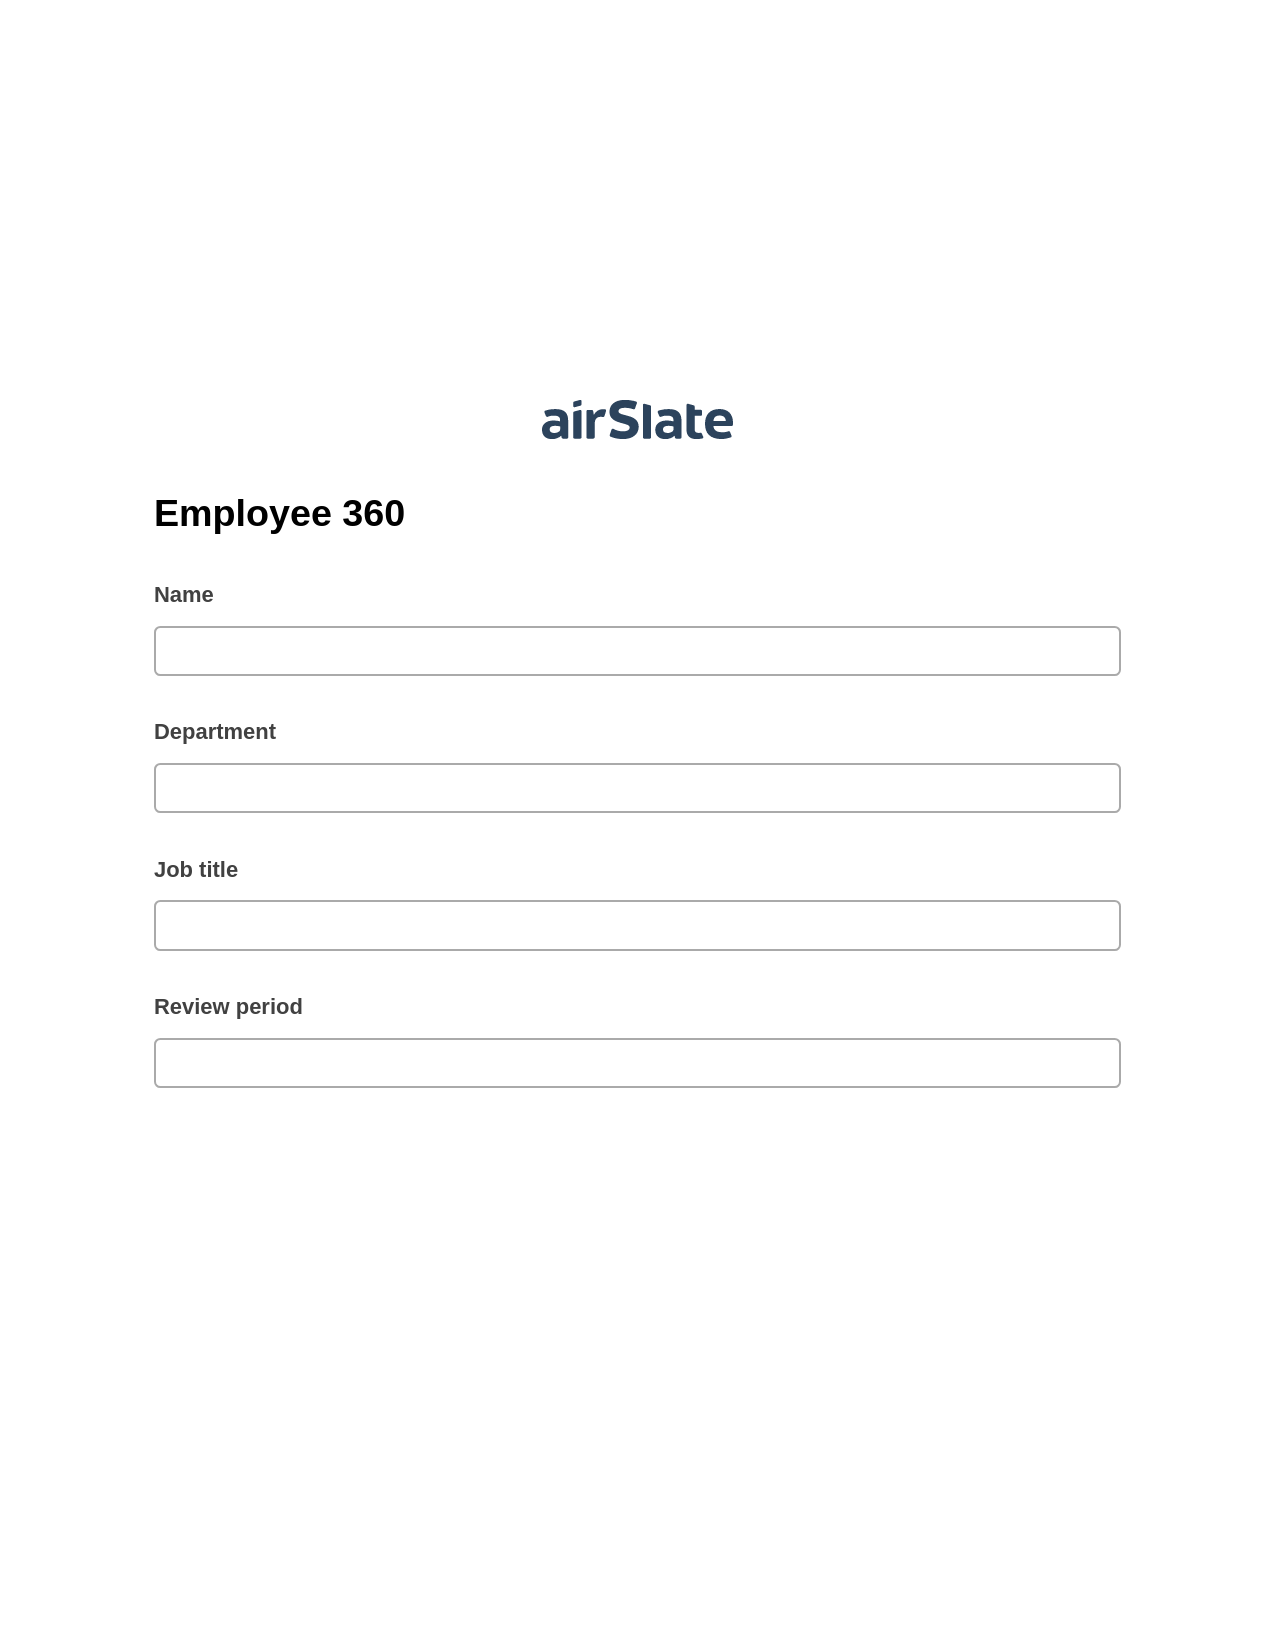 Multirole Employee 360 Pre-fill from MS Dynamics 365 Records, Invoke Salesforce Process Bot, Archive to Google Drive Bot